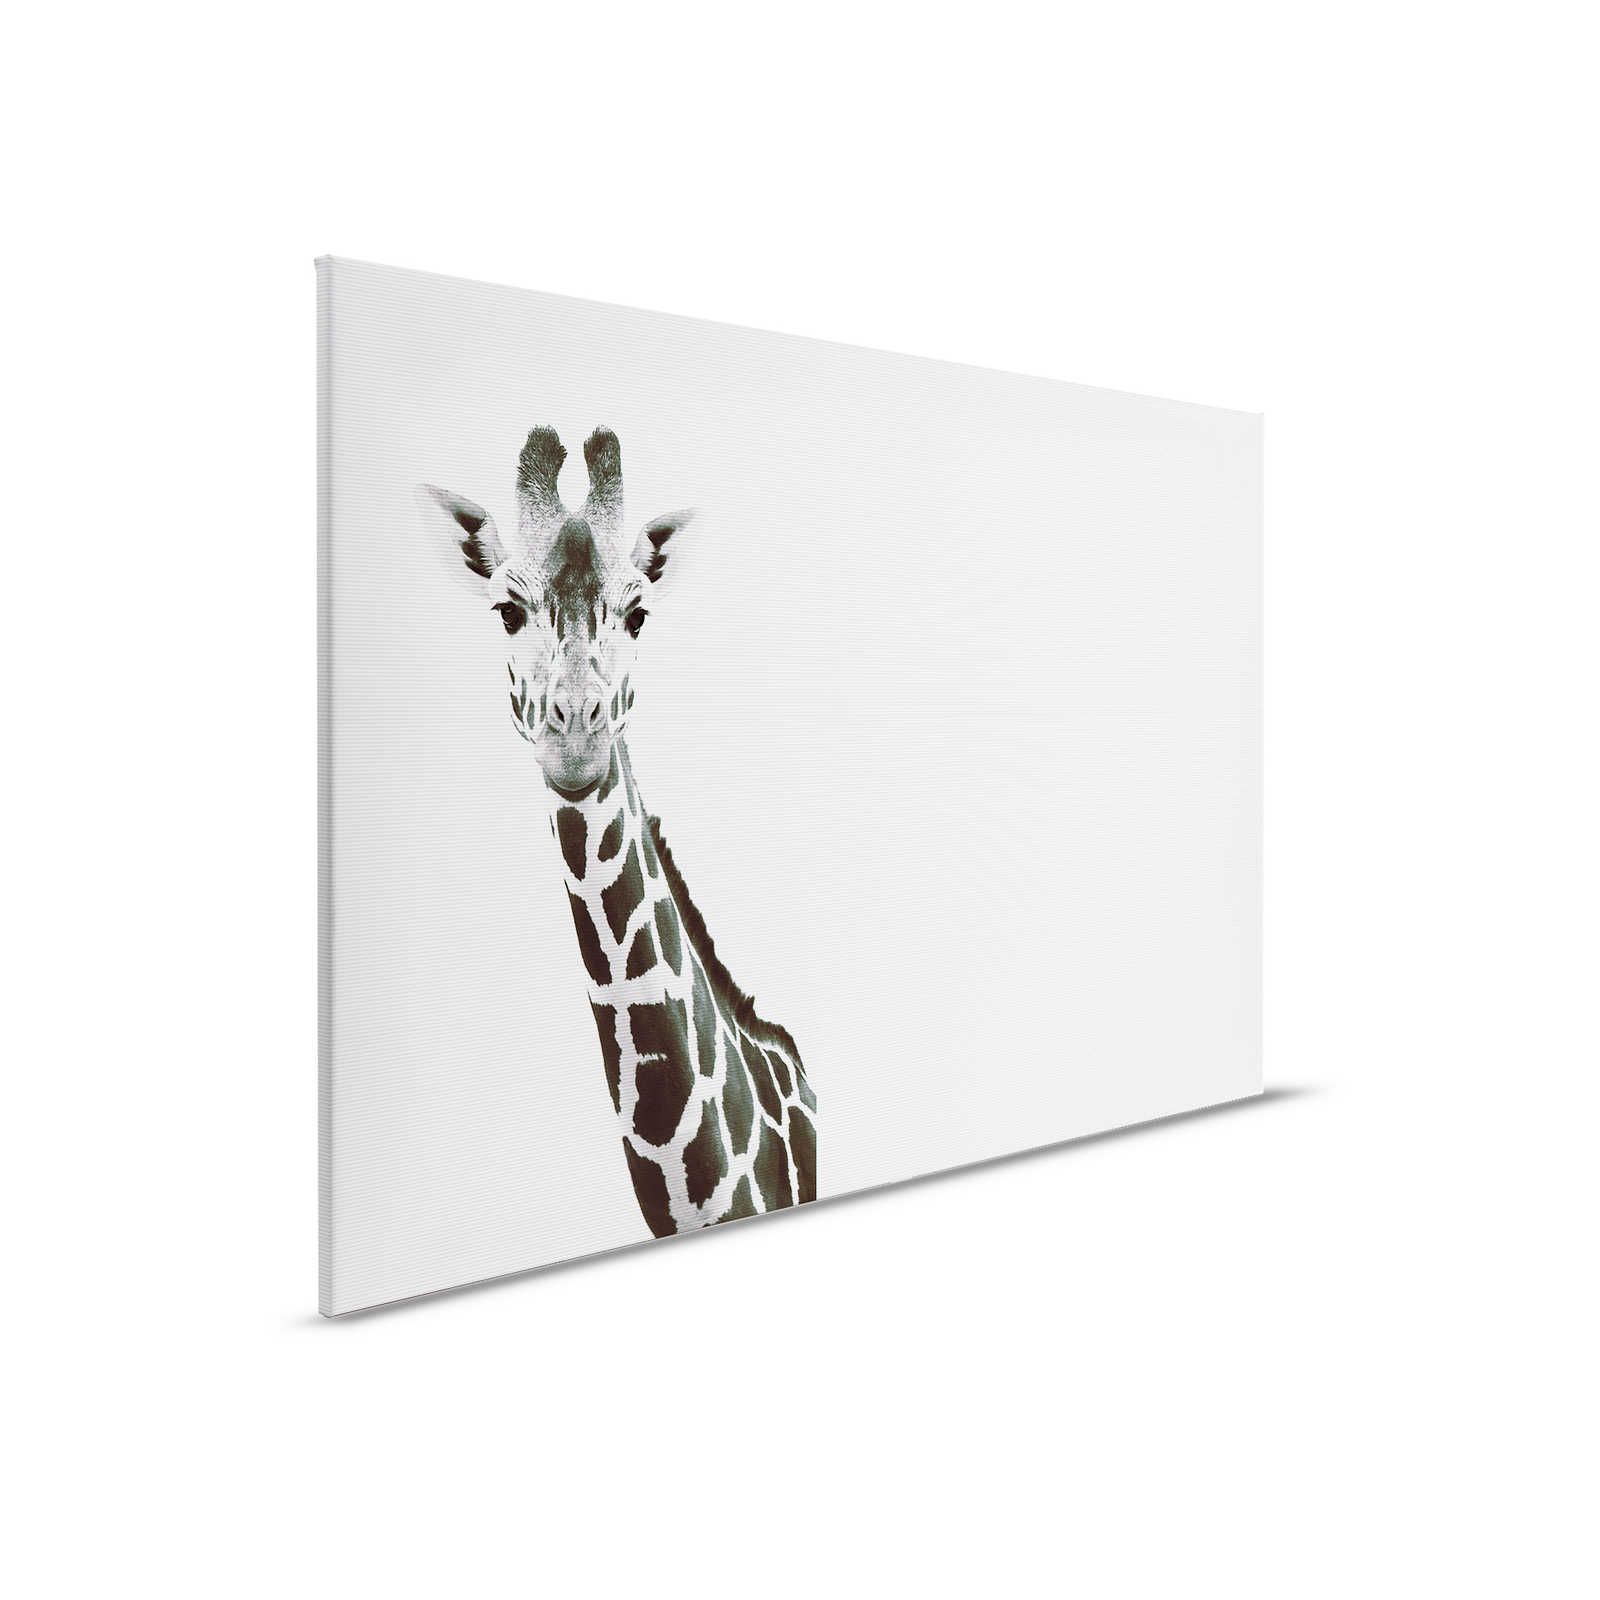 Tableau girafe XXL en noir et blanc - 0,90 m x 0,60 m
